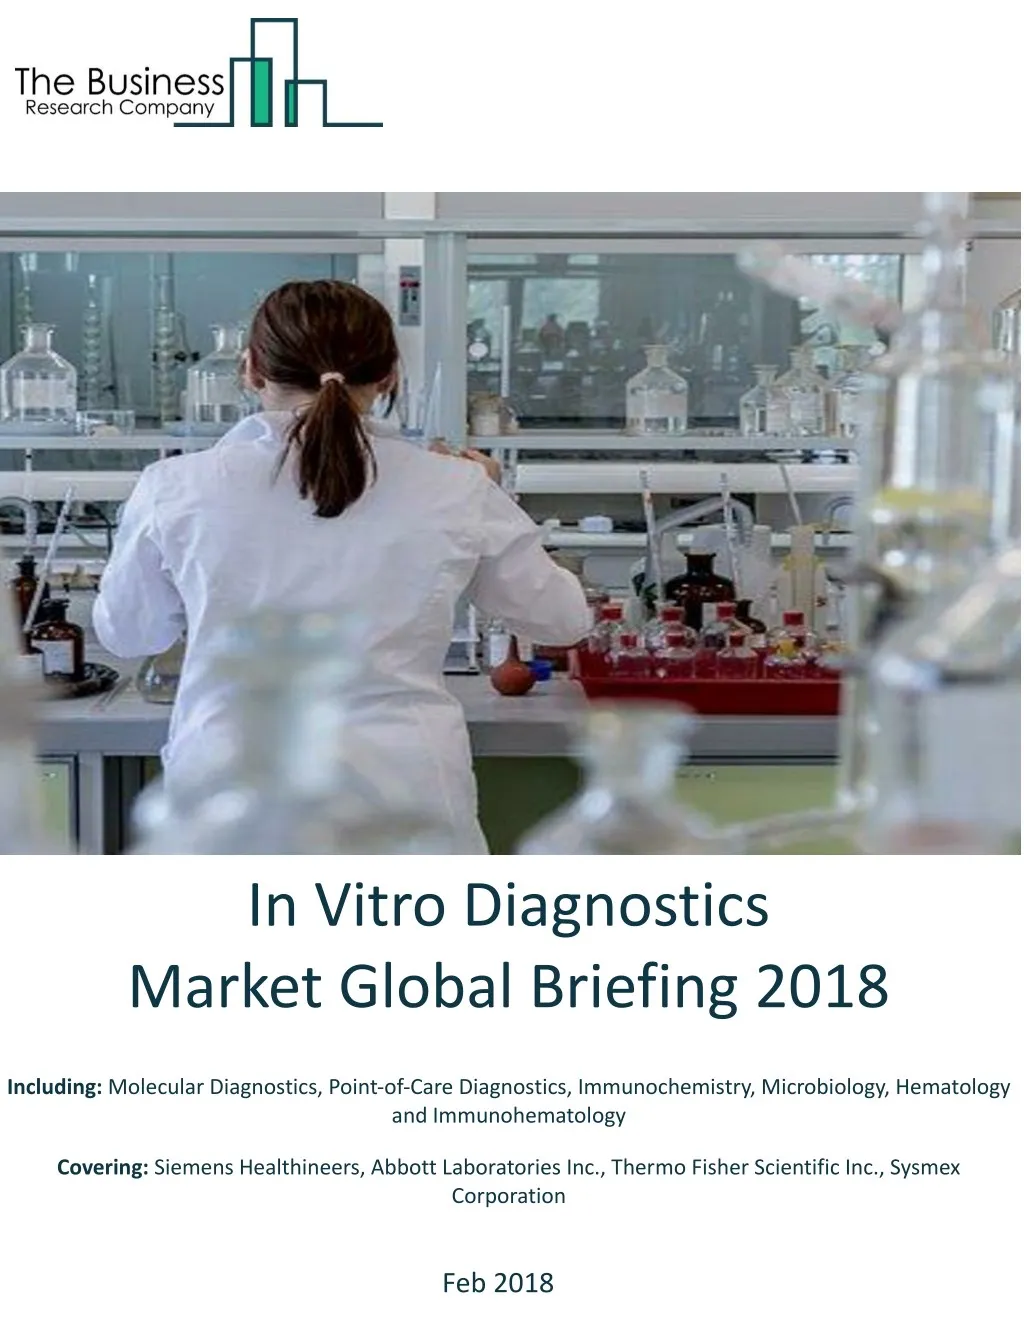 in vitro diagnostics market global briefing 2018